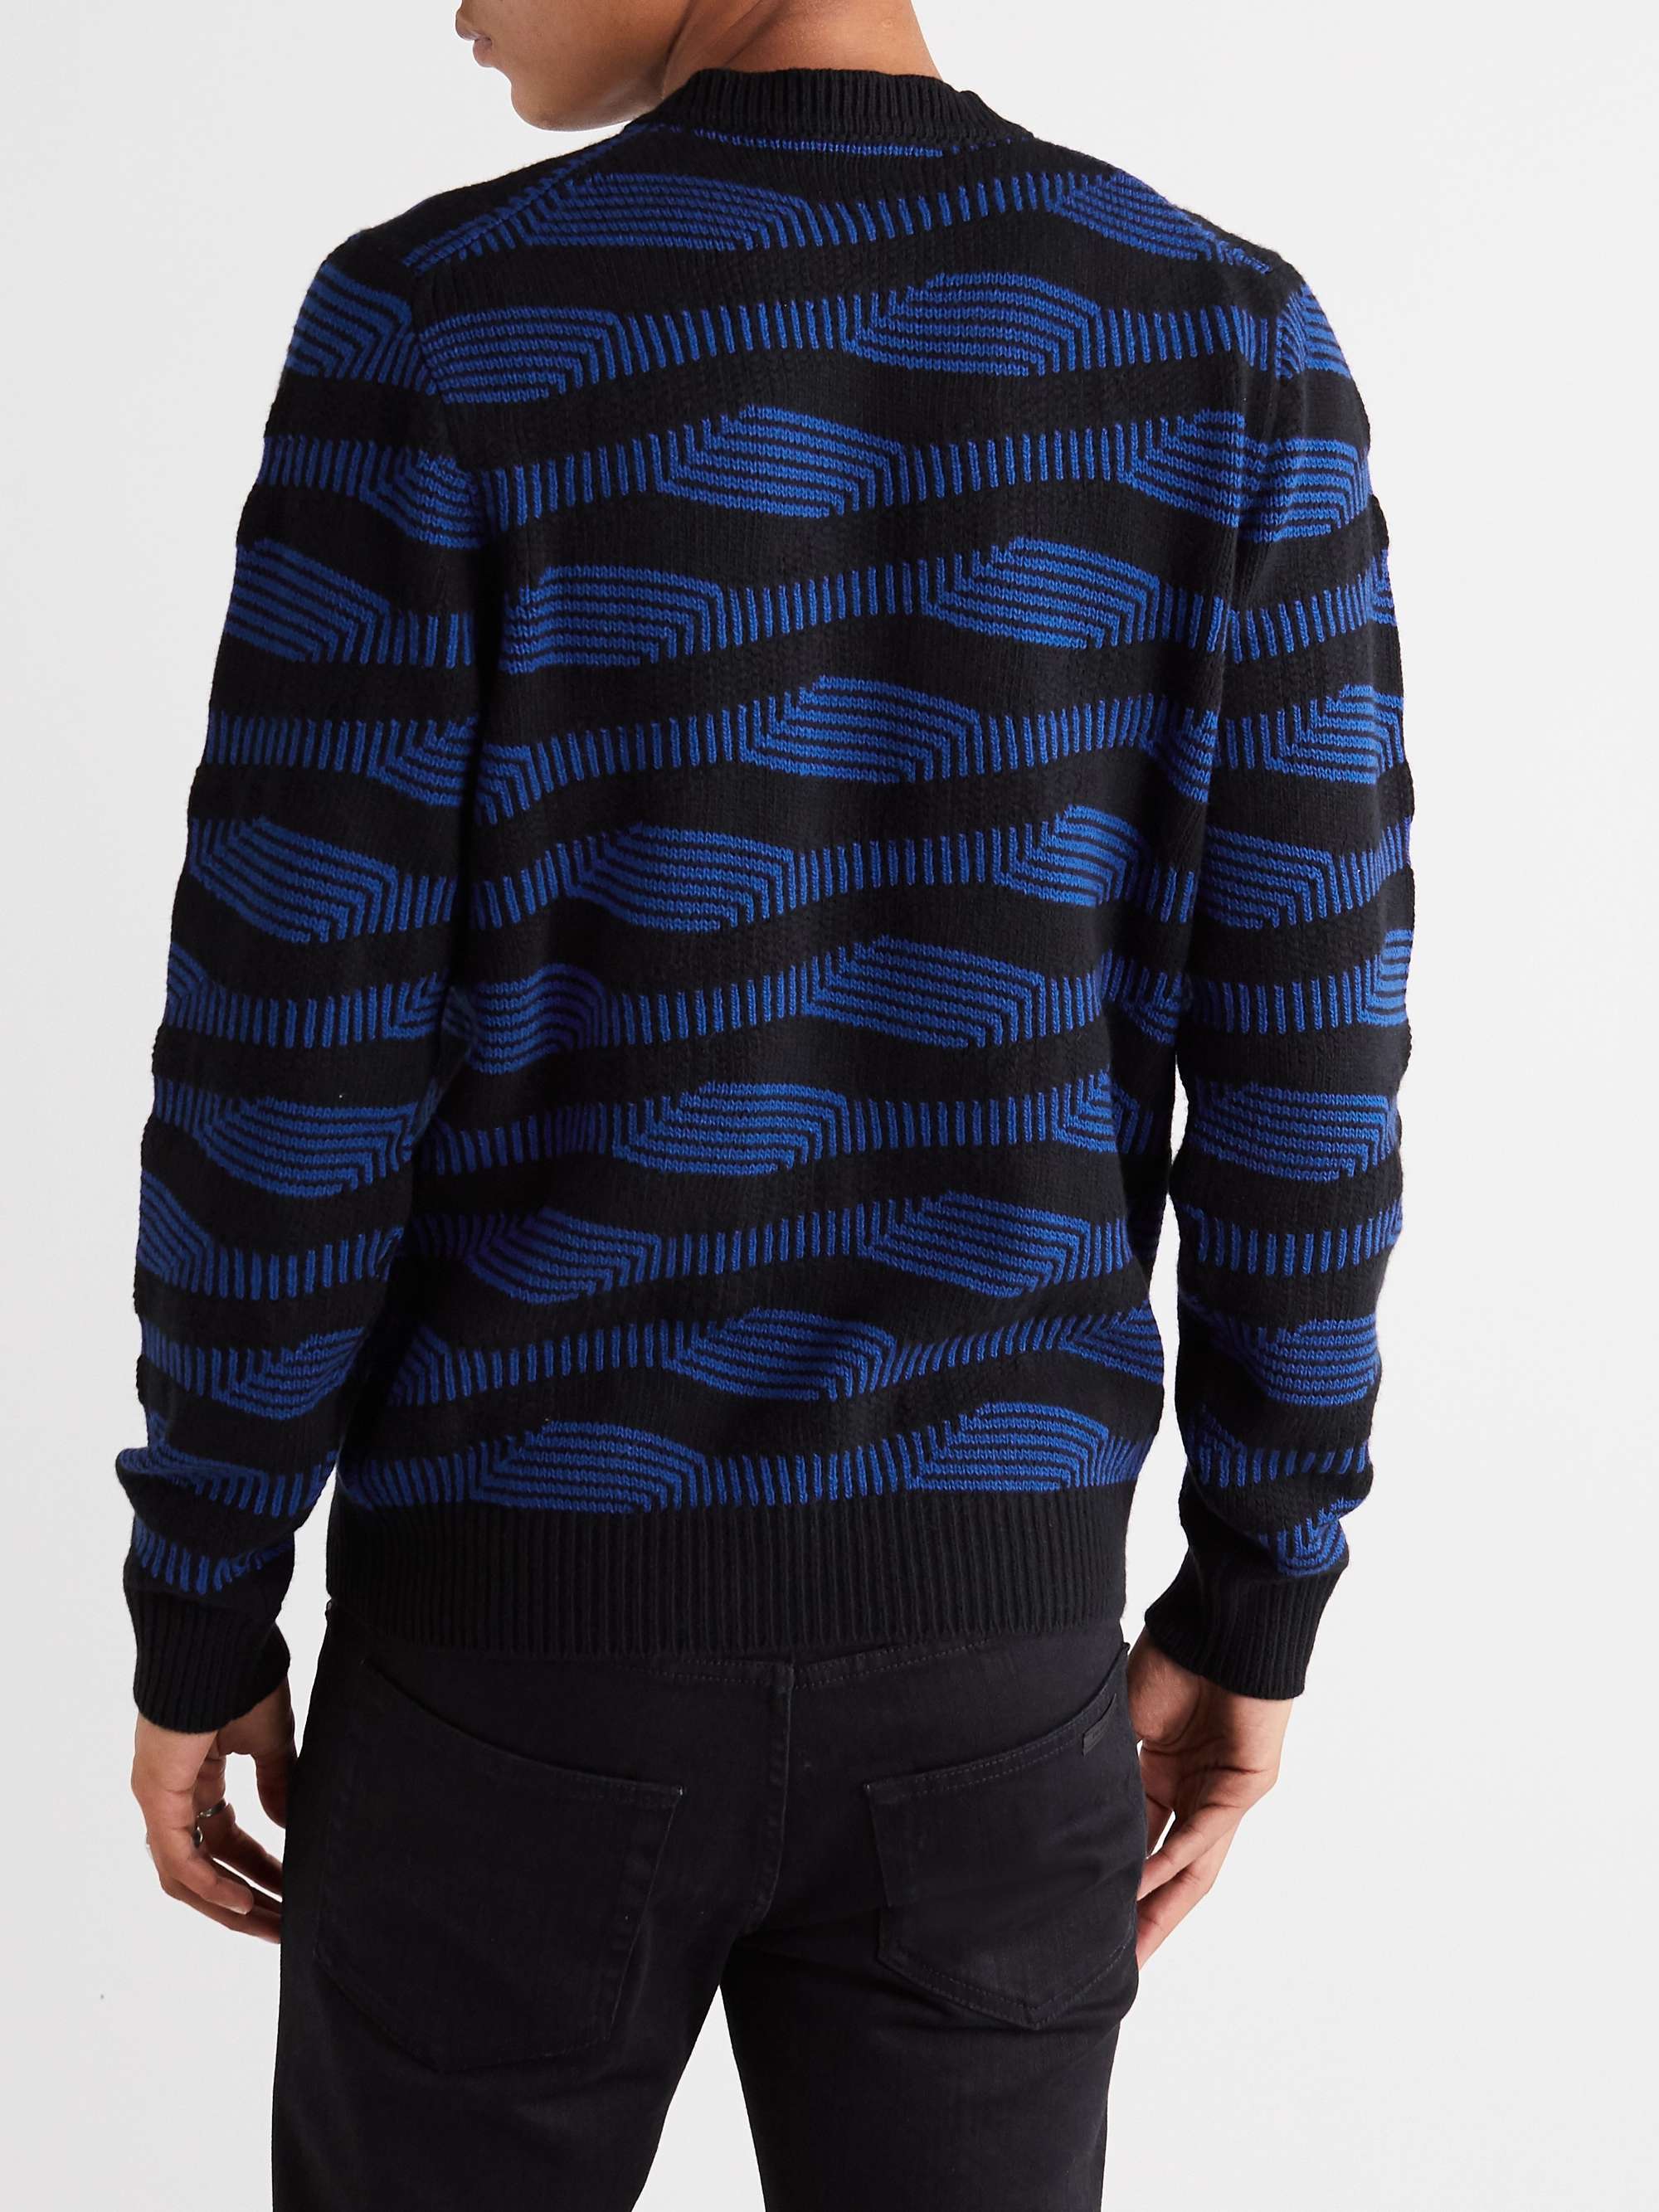 PRADA Intarsia Virgin Wool and Cashmere-Blend Sweater